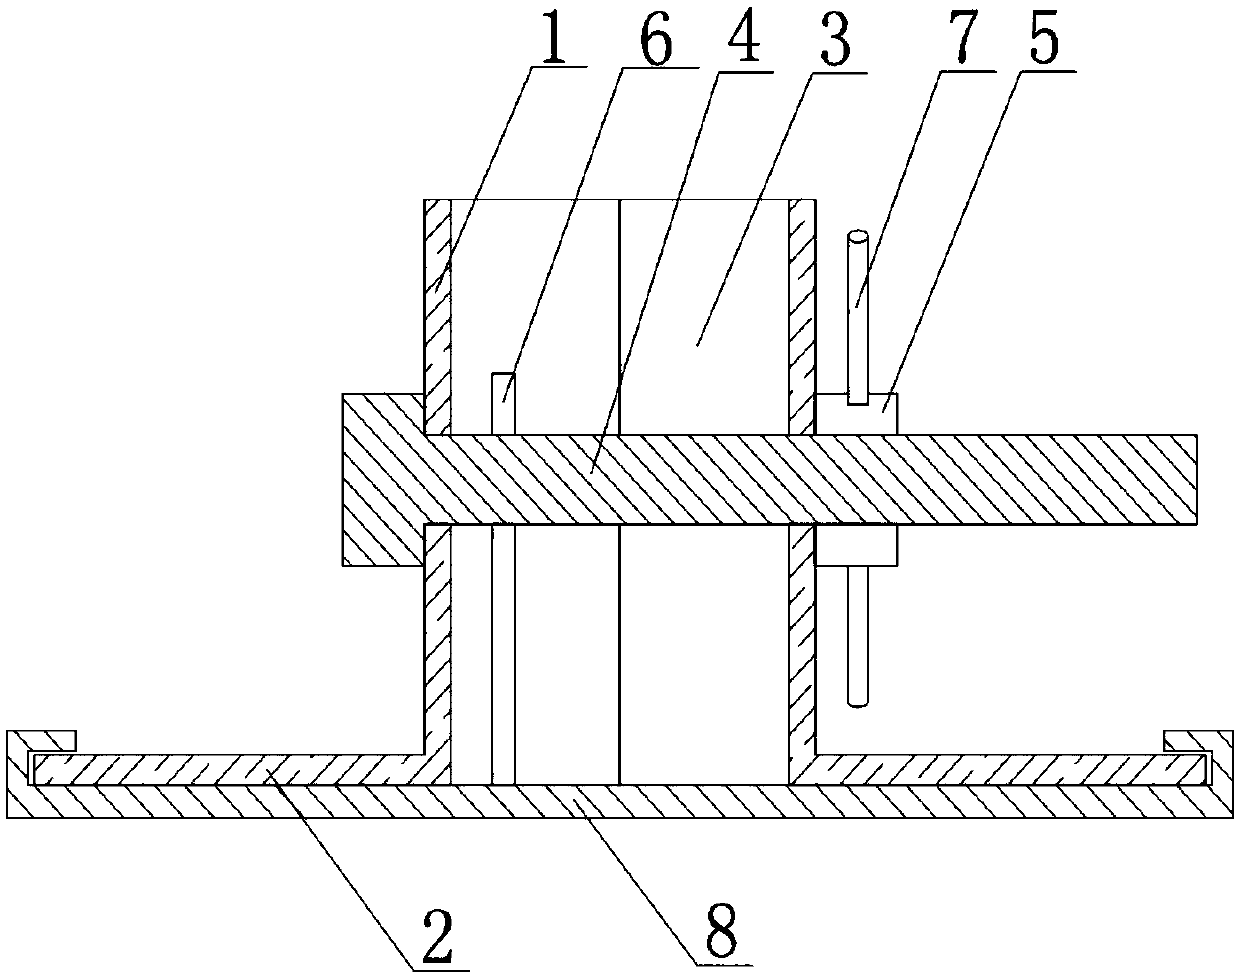 A Batch Forming Process for Building Elevation Concrete Blocks